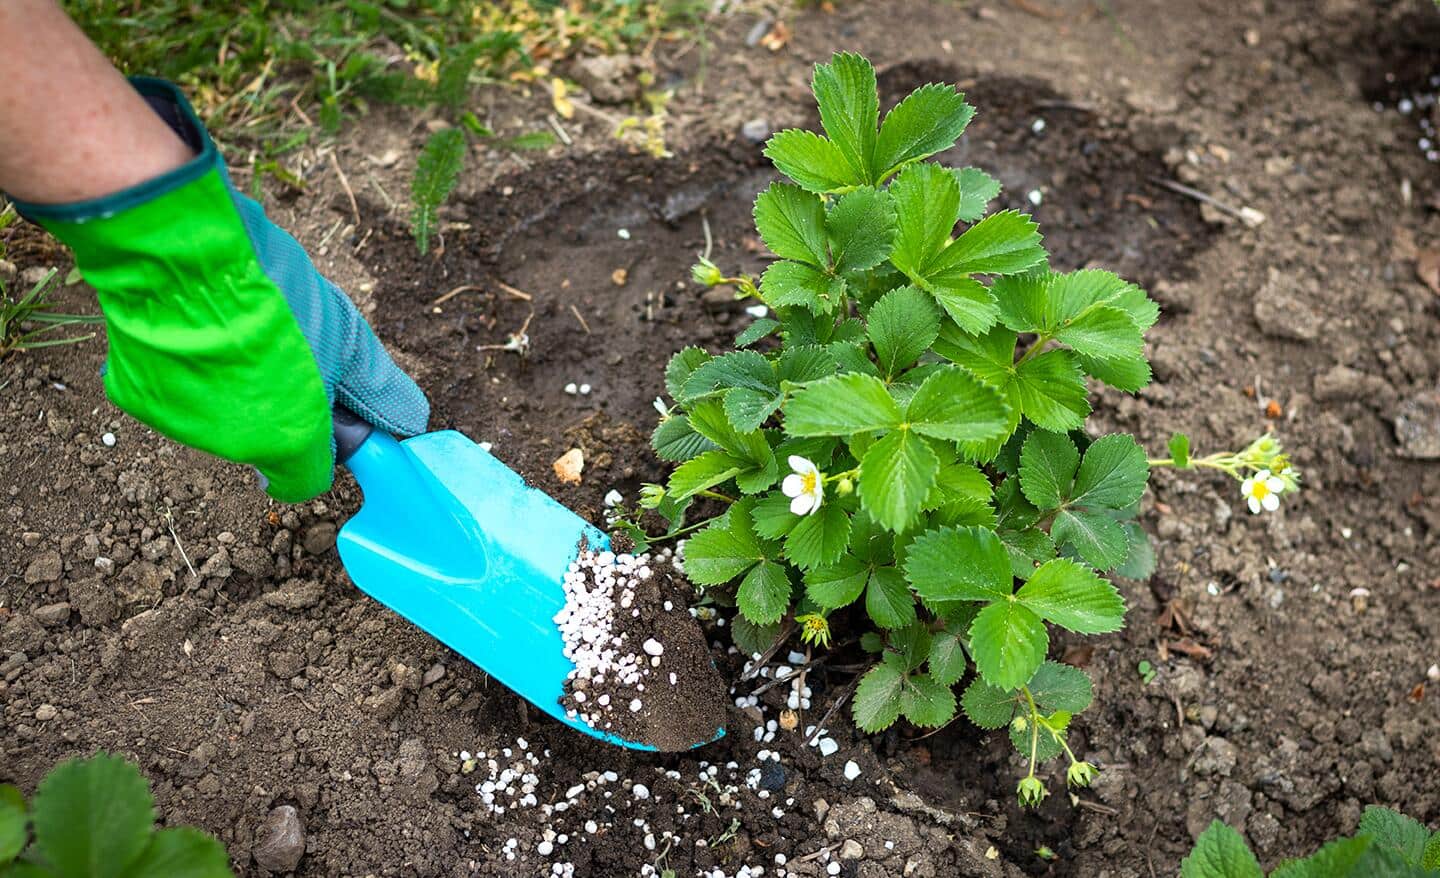 Gardener spreading fertilizer around the base of a plant